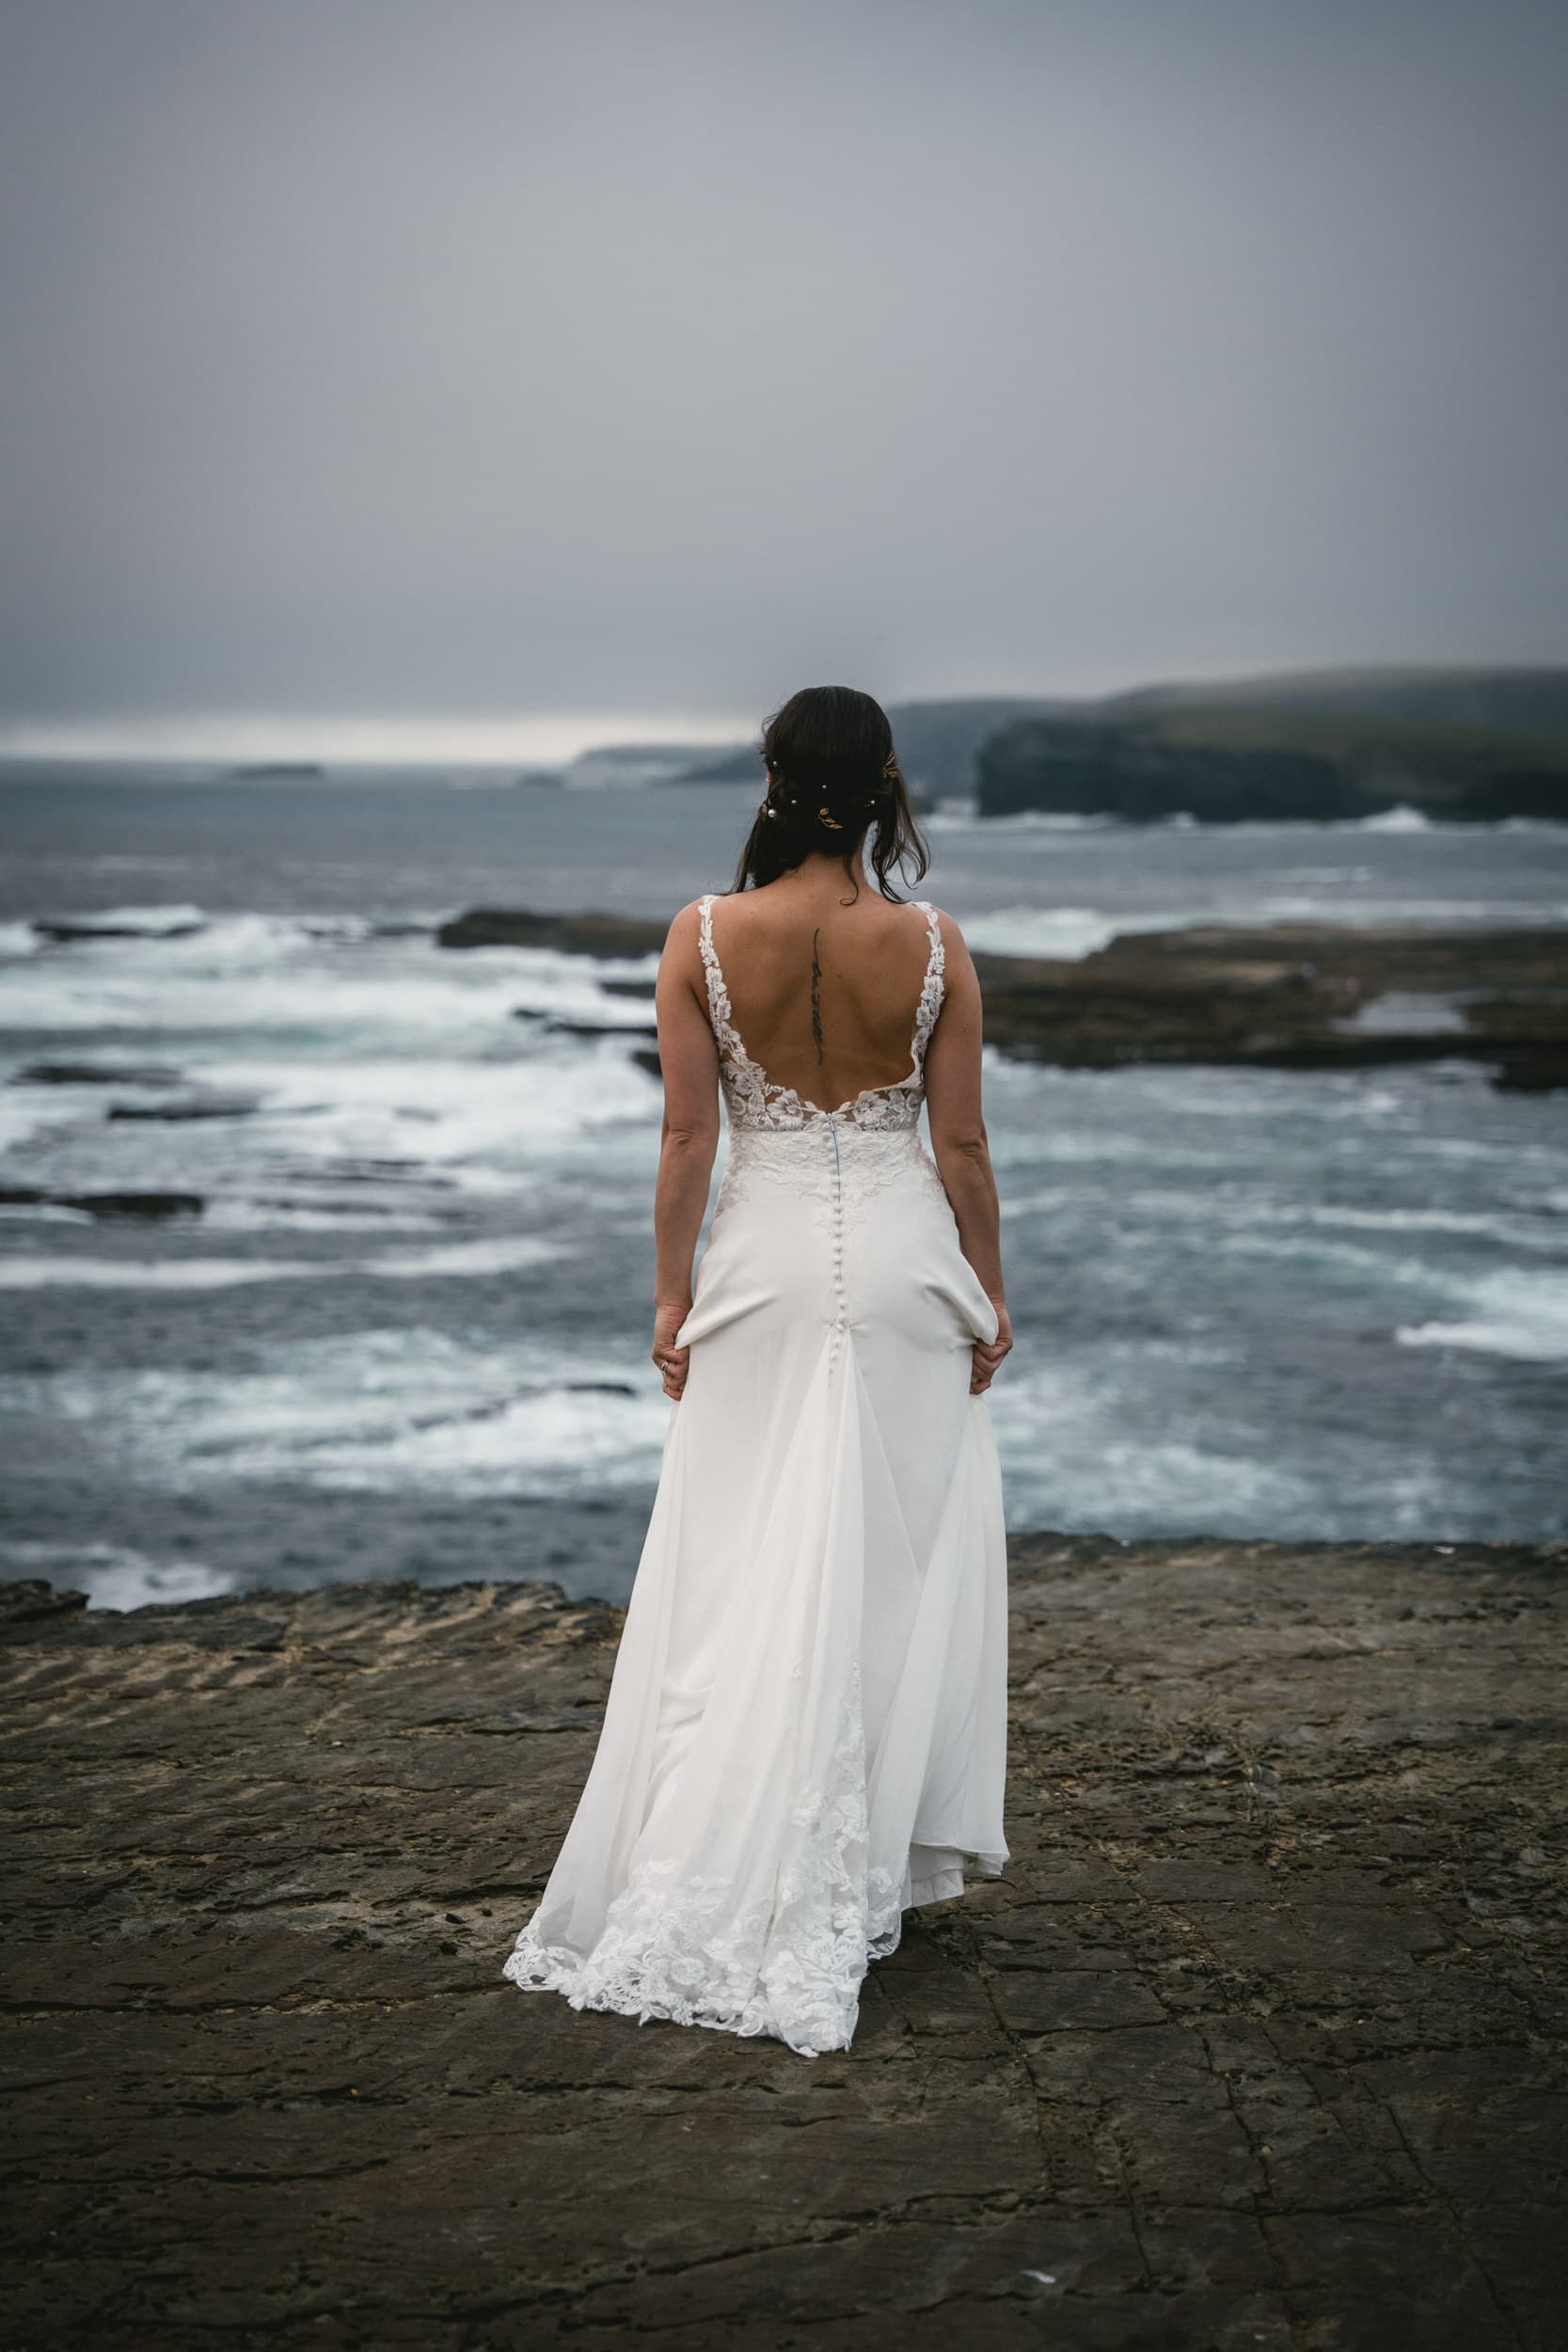 Irish elopement bliss: Capturing love against the misty cliffs.